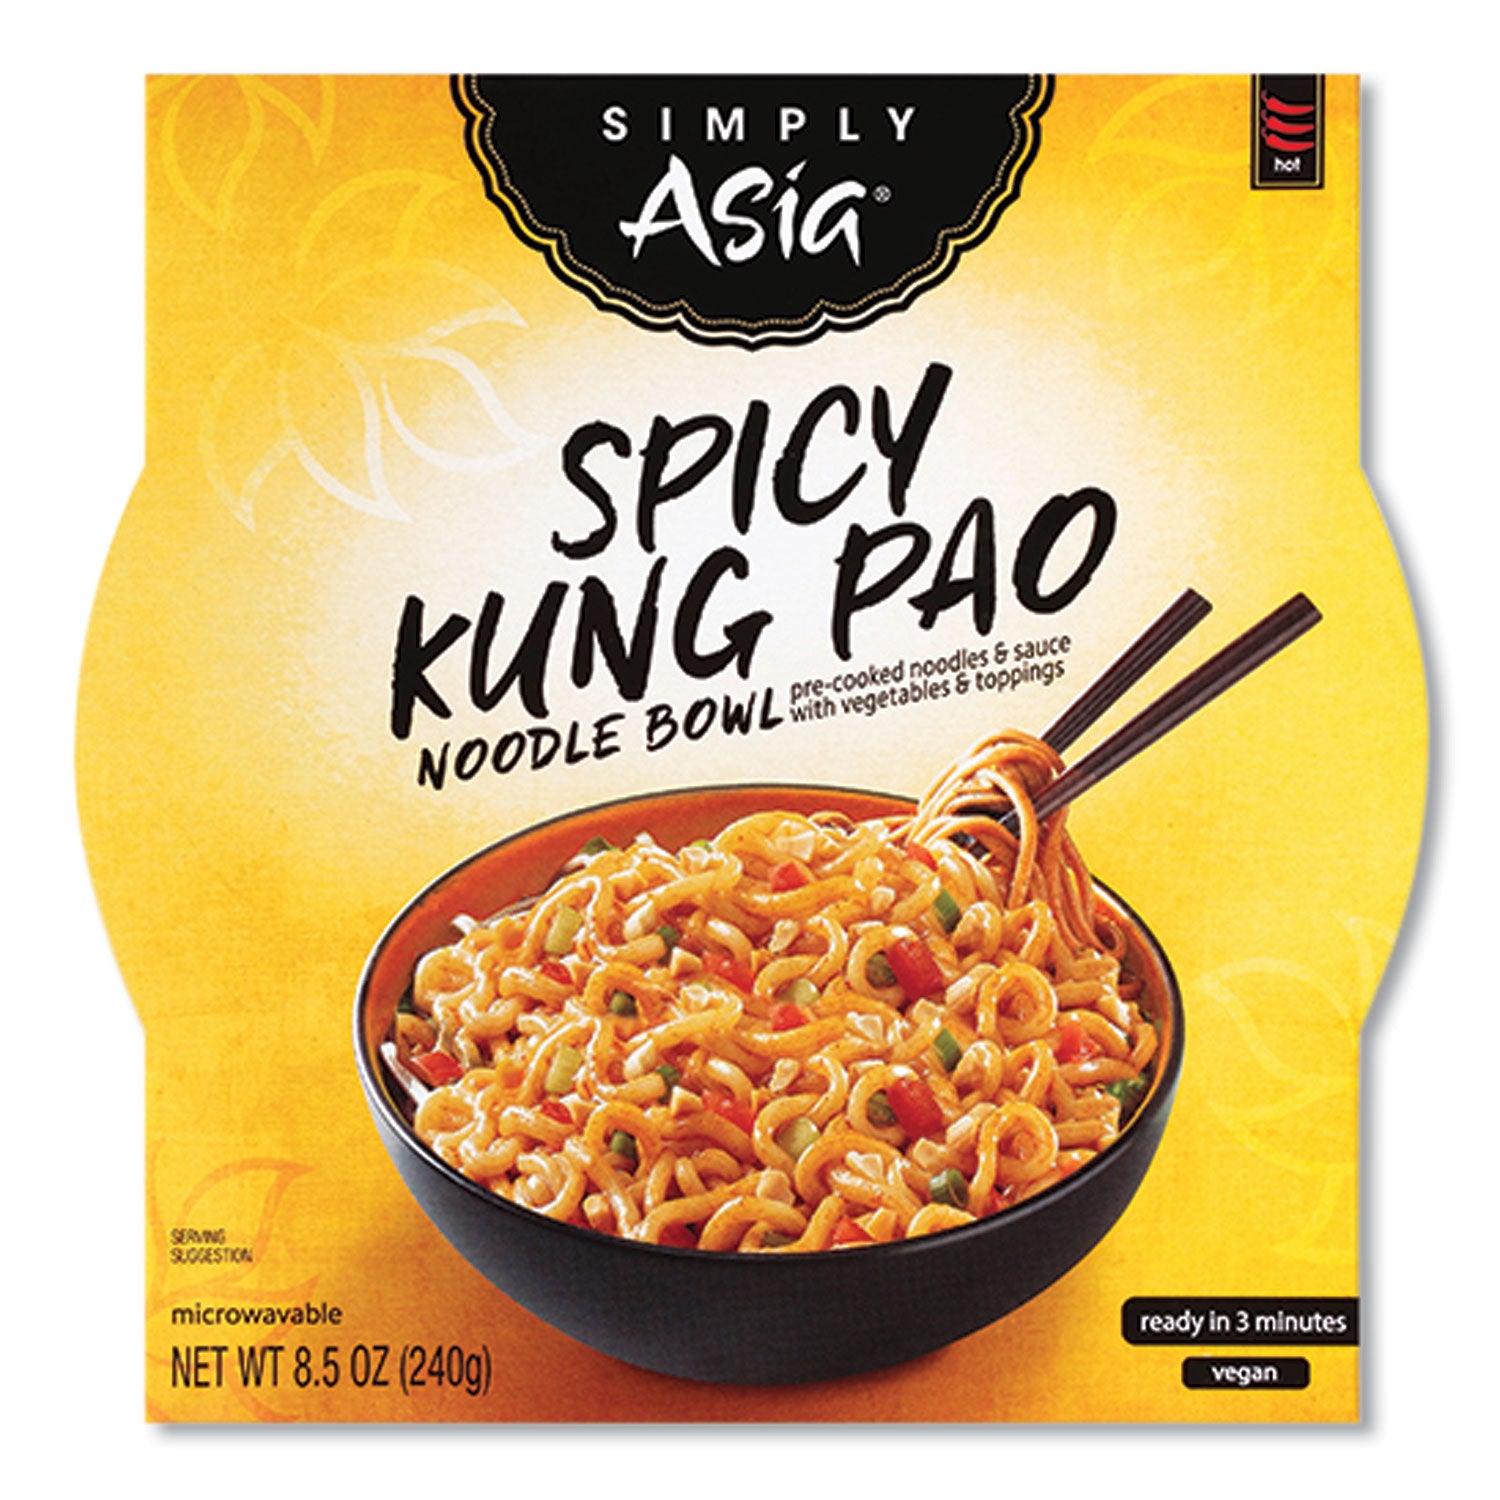 simply-asia-spicy-kung-pao-noodle-bowl-85-oz-6-carton_mkctha000831 - 1